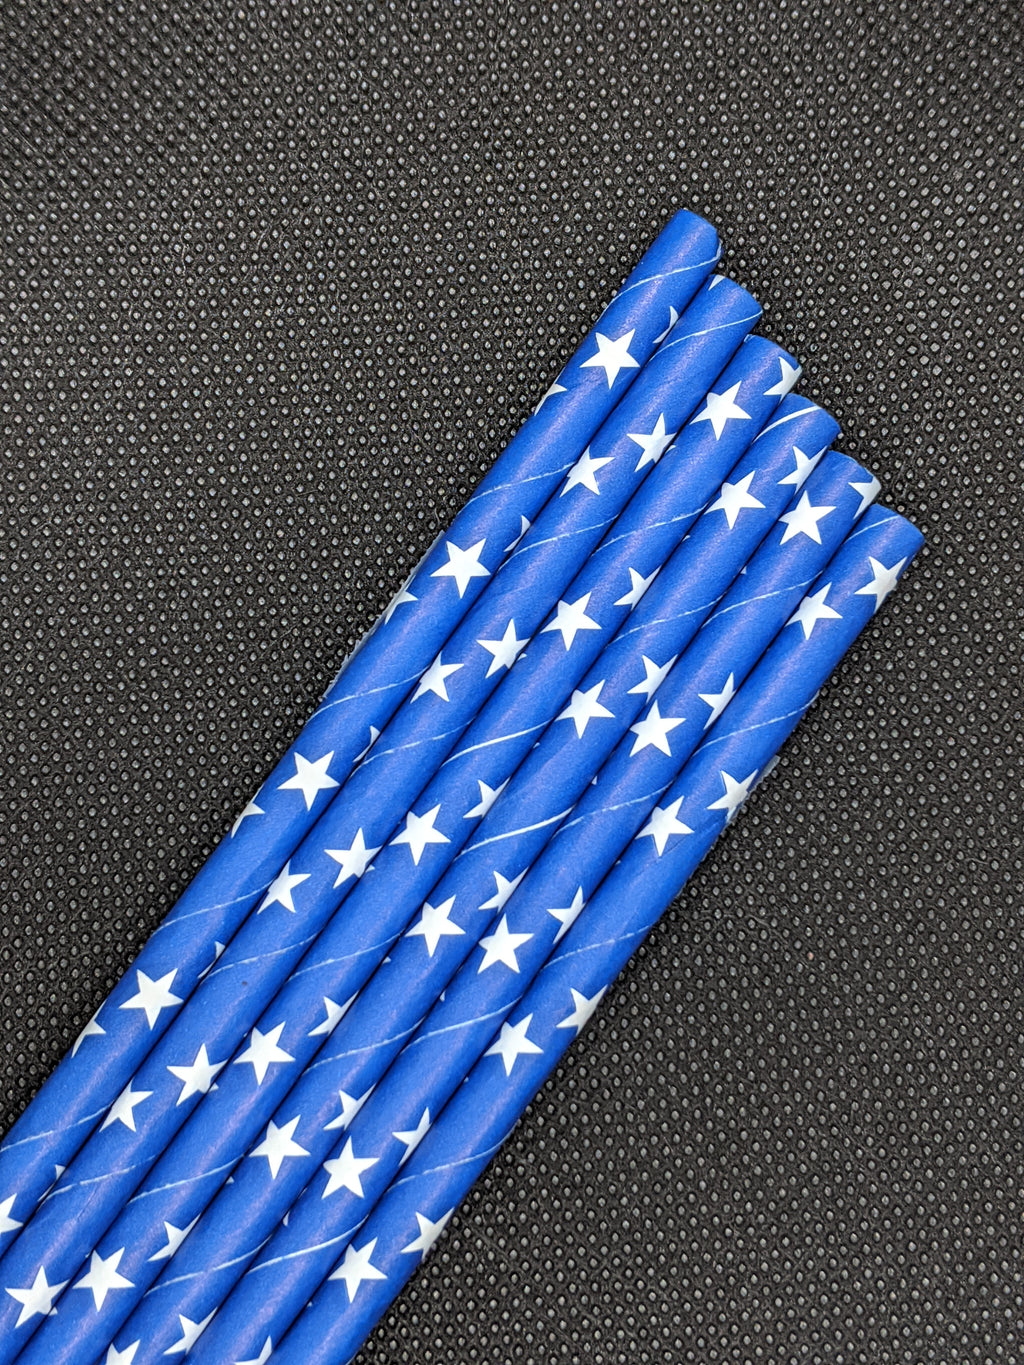 7.75" BLUE PAPER STRAWS - STAR DESIGN - 4000 CT (UNWRAPPED) - Orcas Ocean Straws